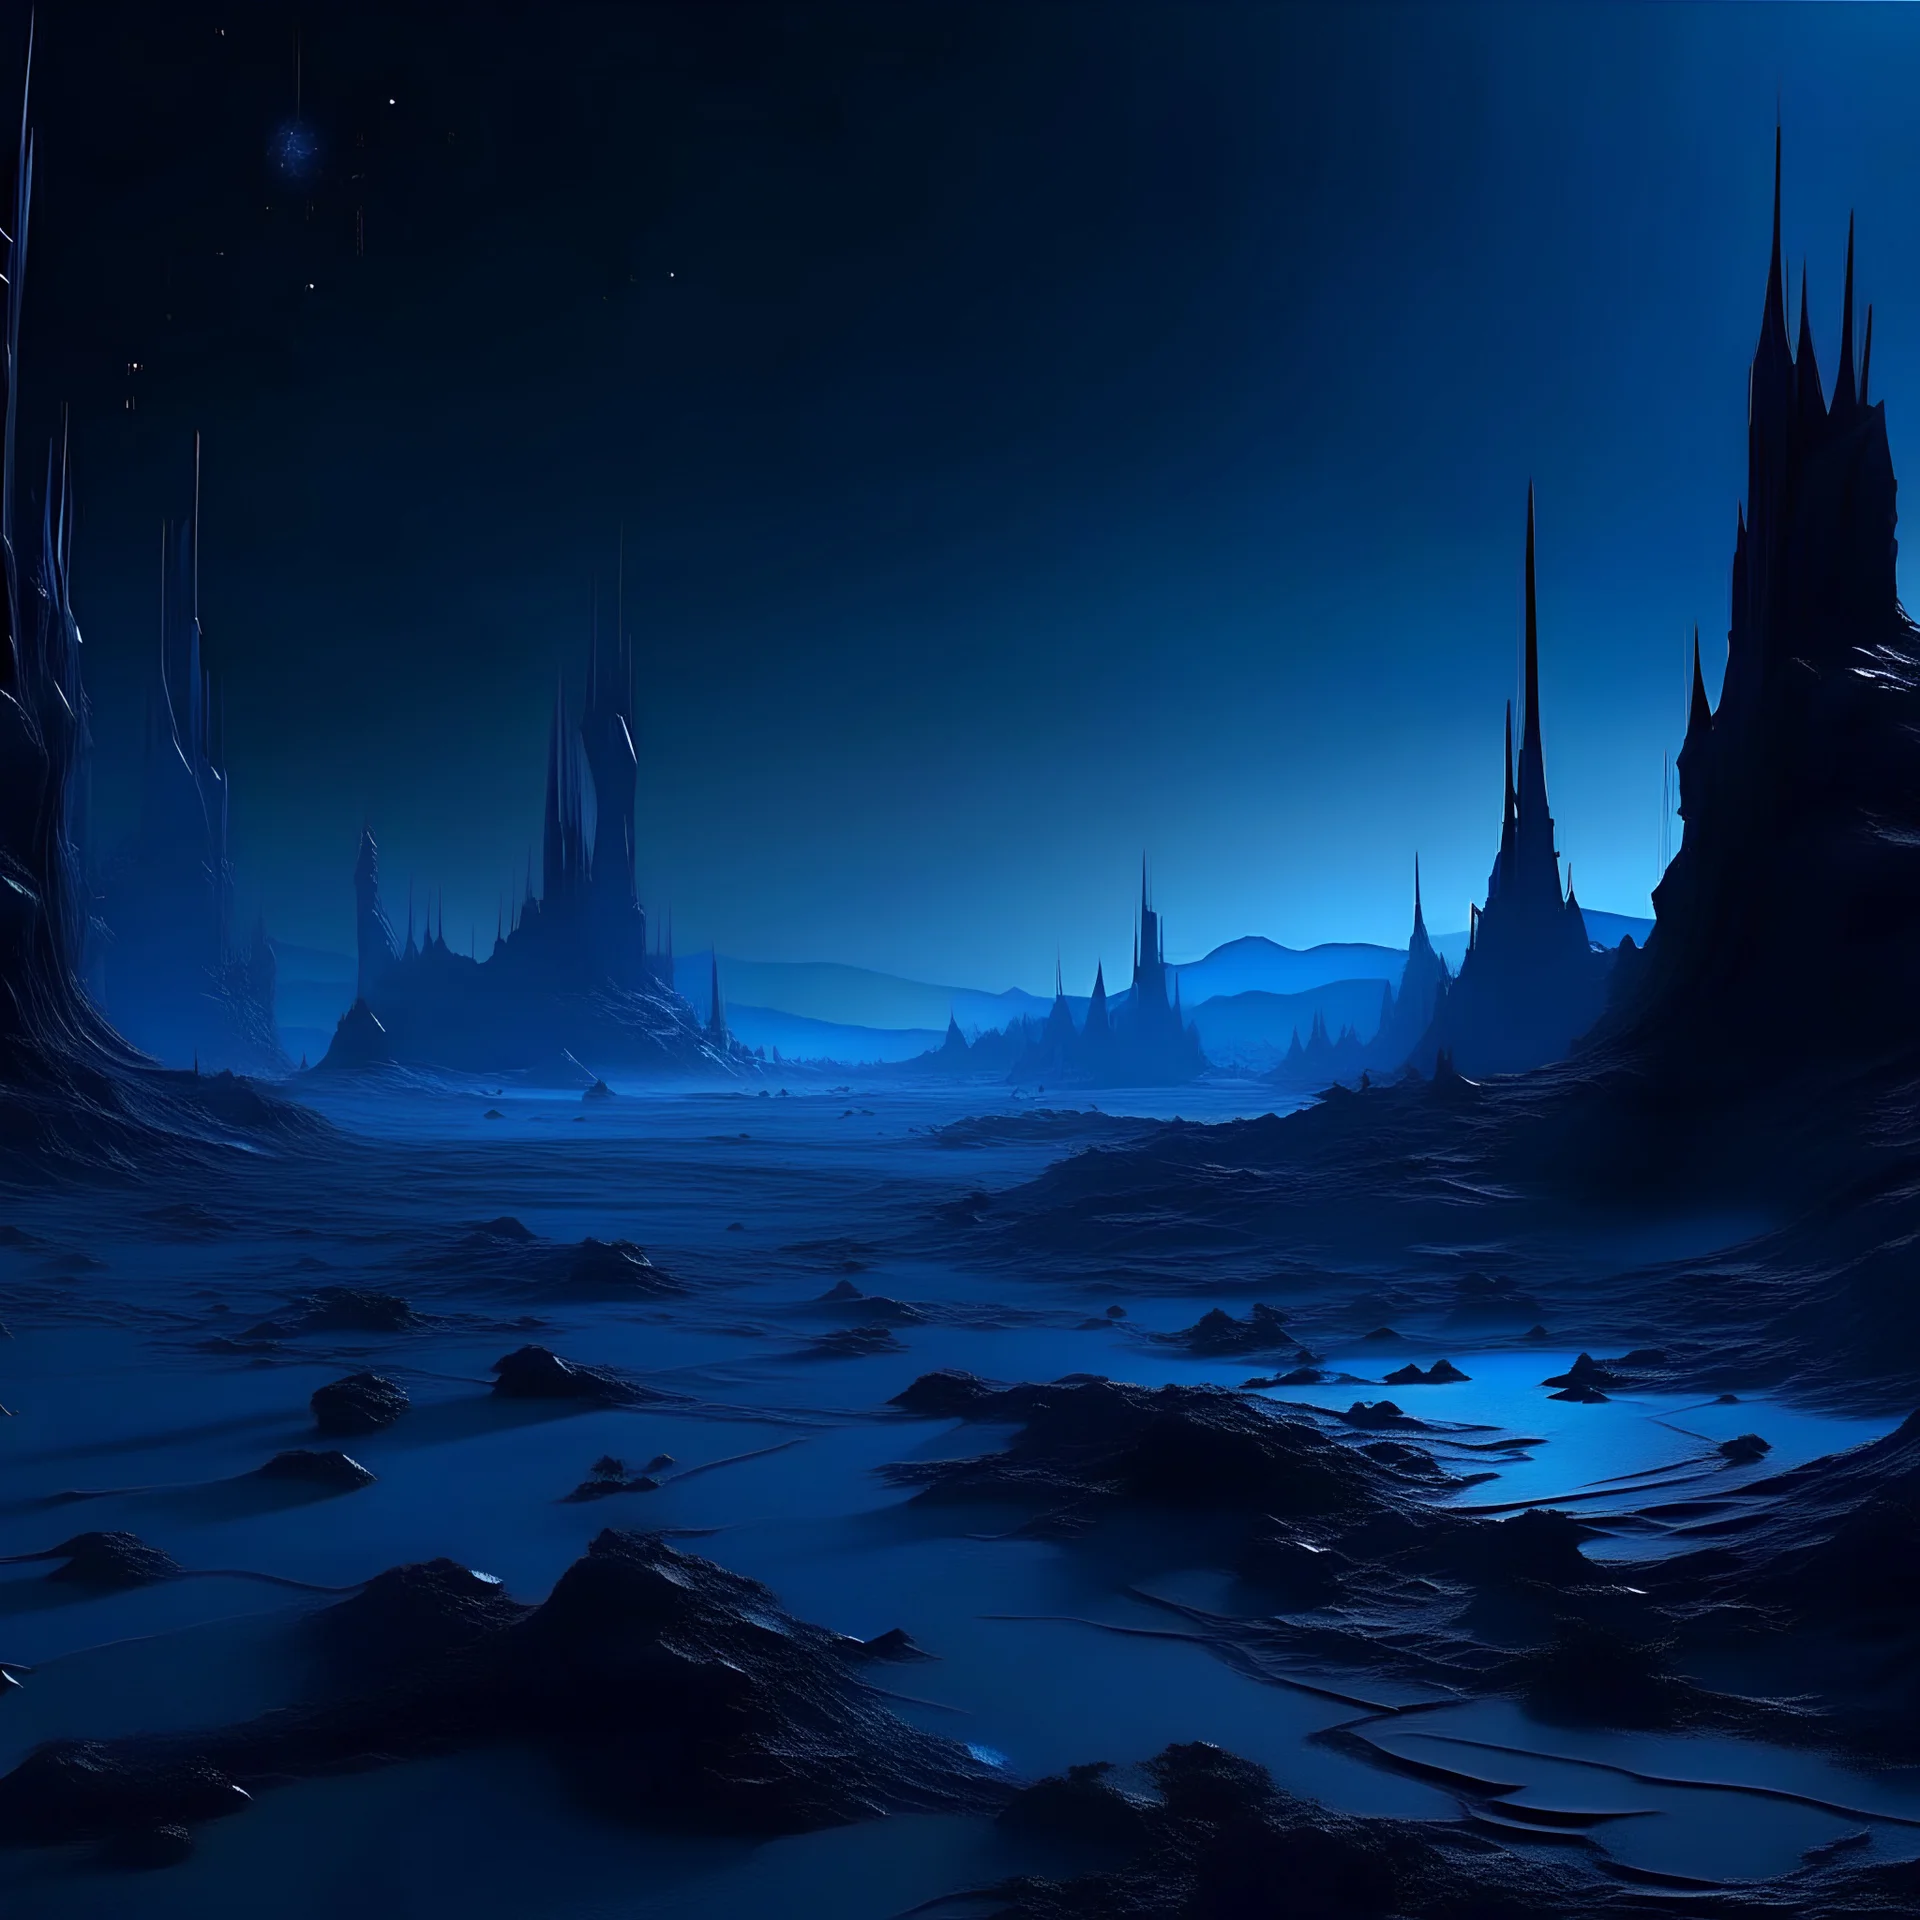 dark frozen alien landscape. some tiny, spiky blue alien creatures. spacecraft in the distance. planet in the distance